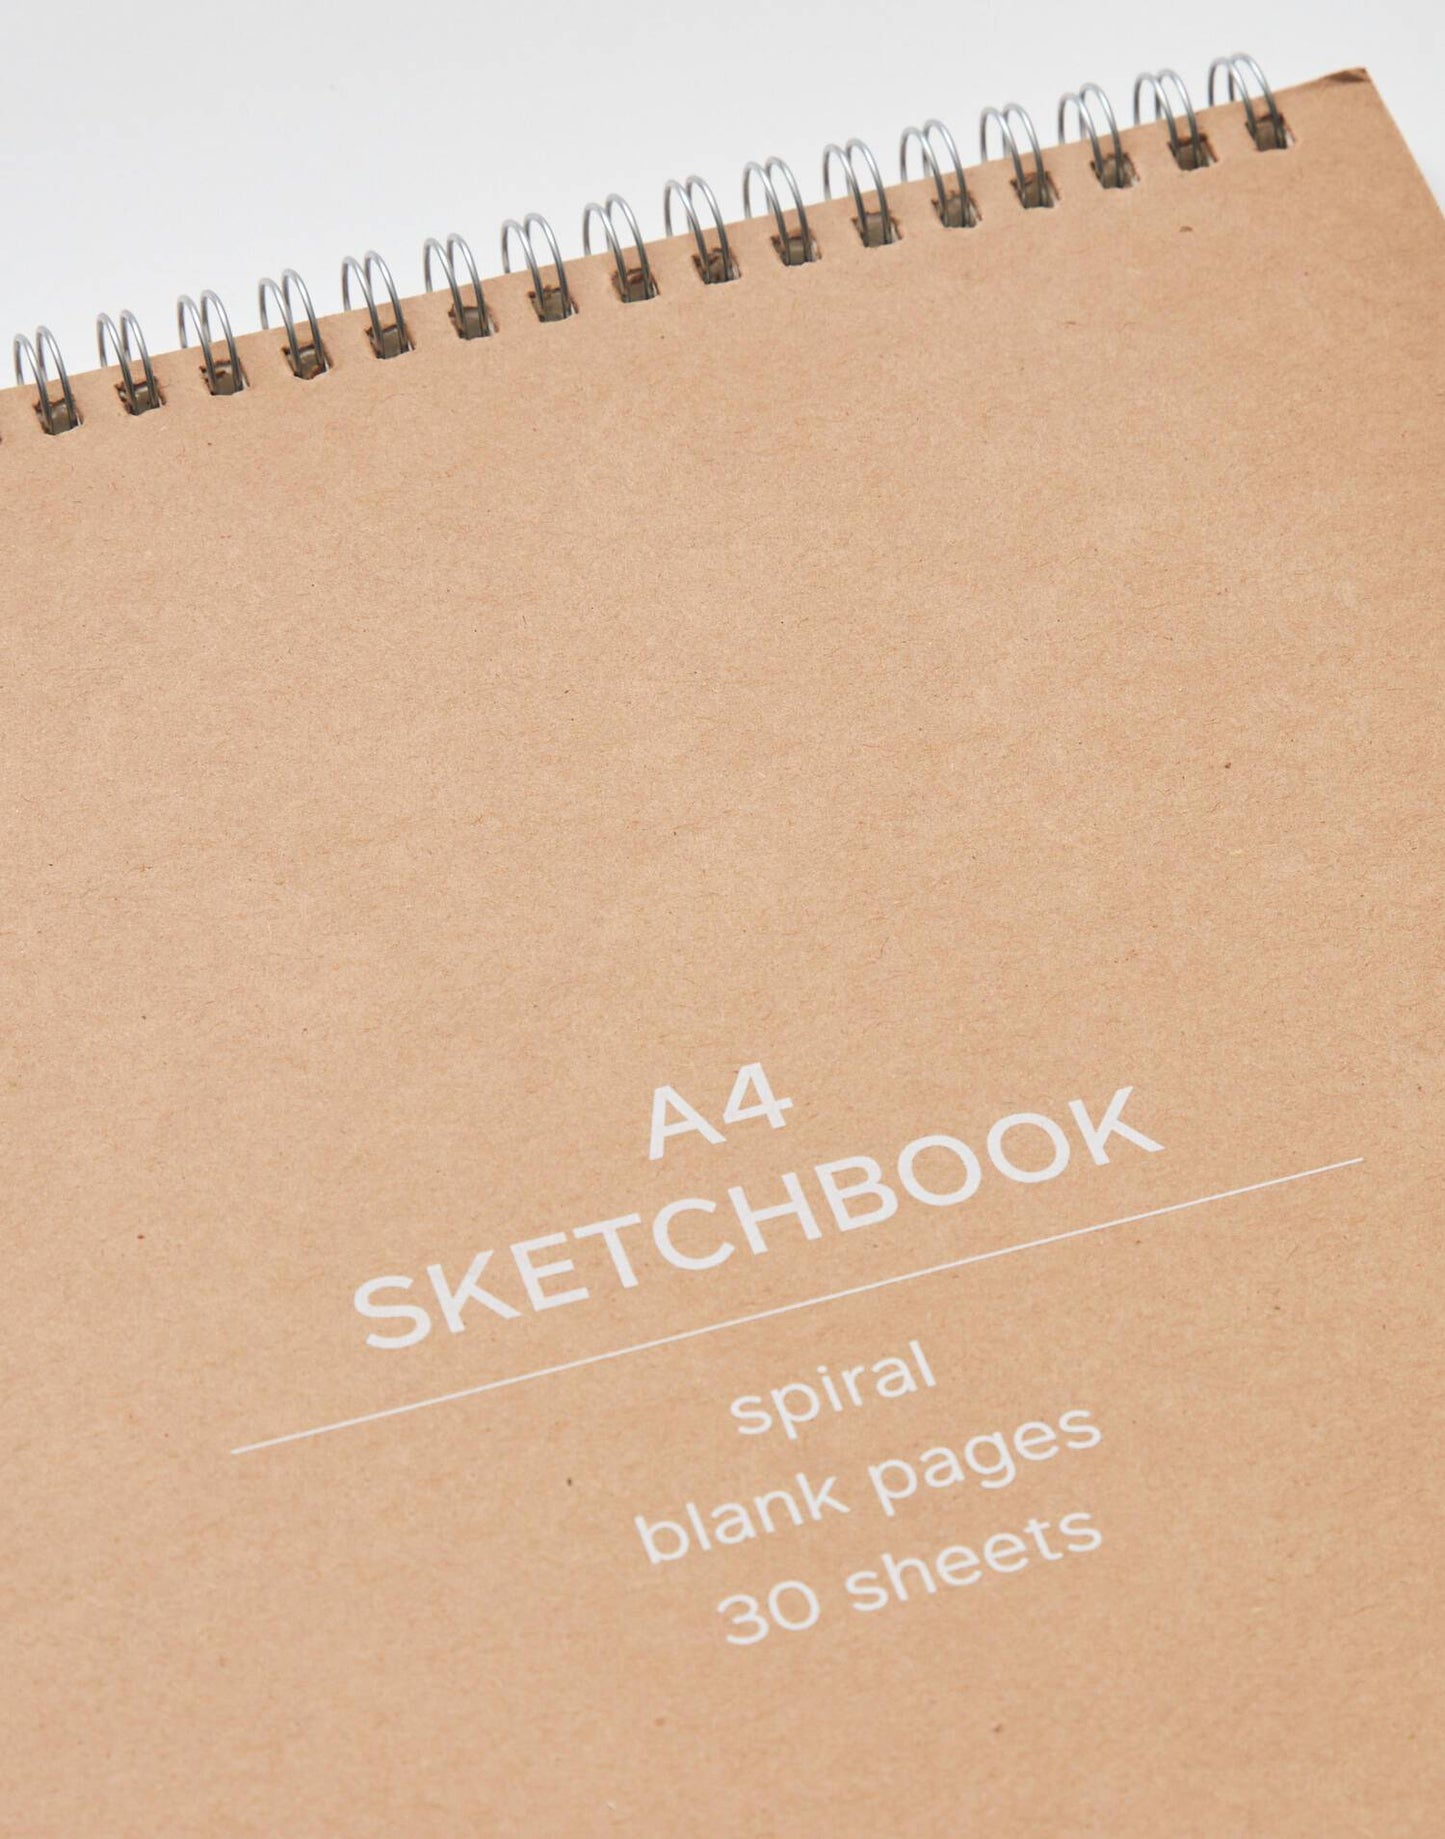 A4 sketchbook